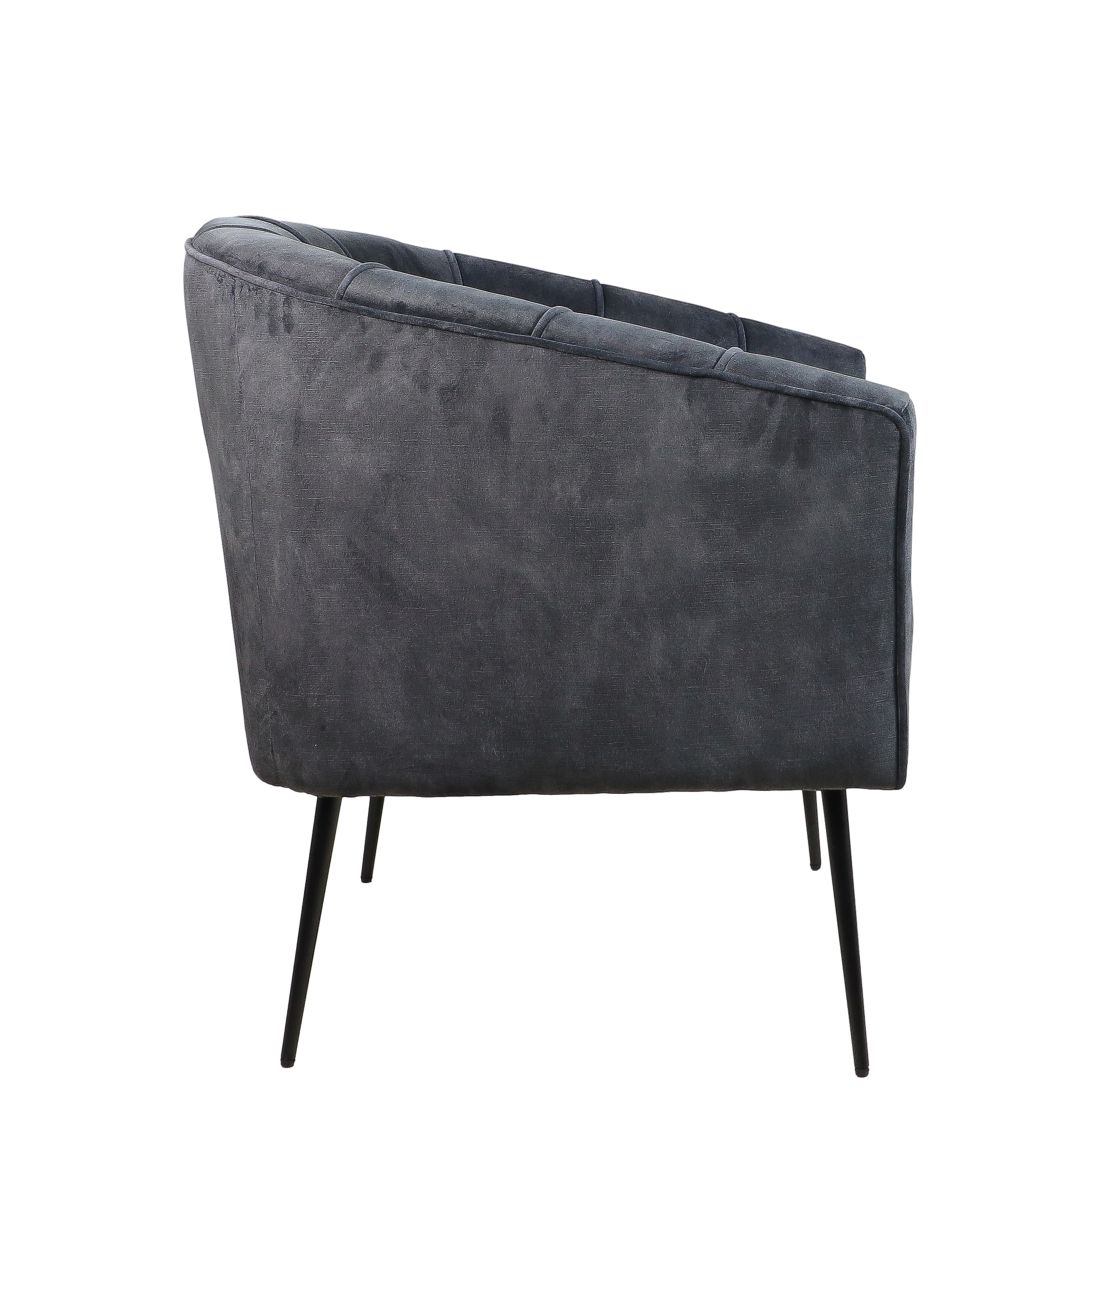 Lounge chair Chester - 72x71x80 - Dark grey - Adore 29